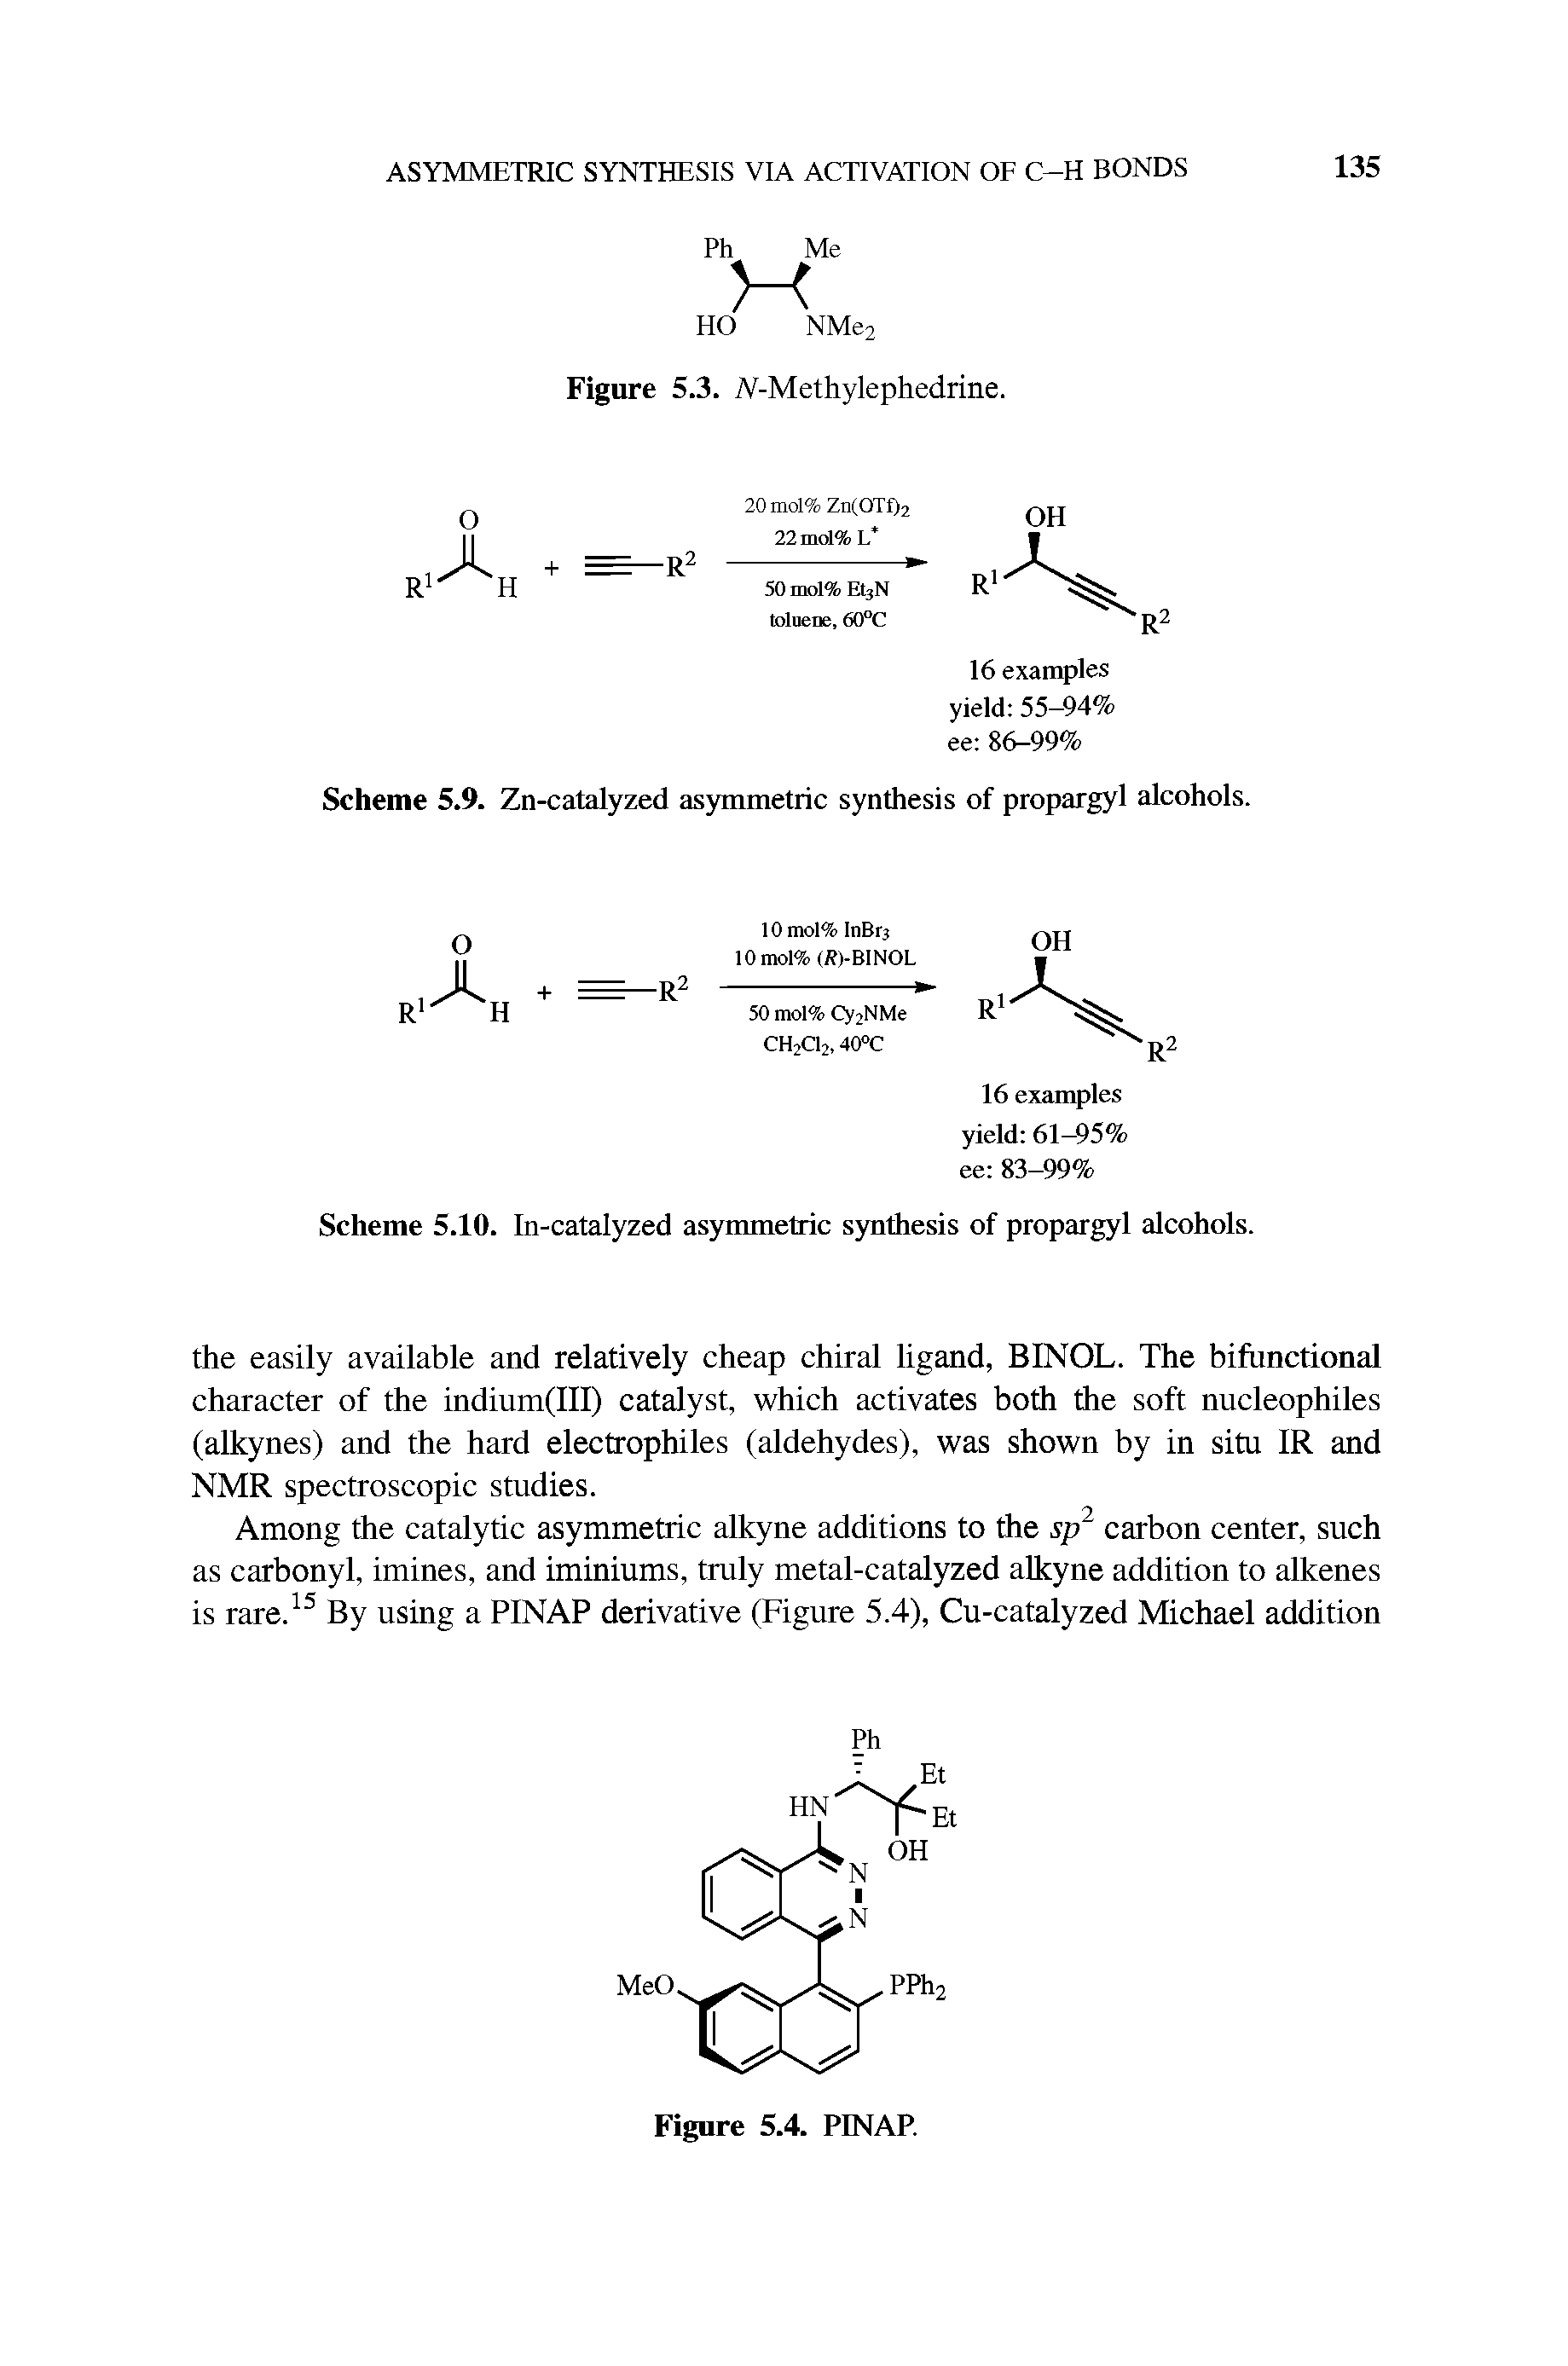 Scheme 5.9. Zn-catalyzed asymmetric synthesis of propargyl alcohols.